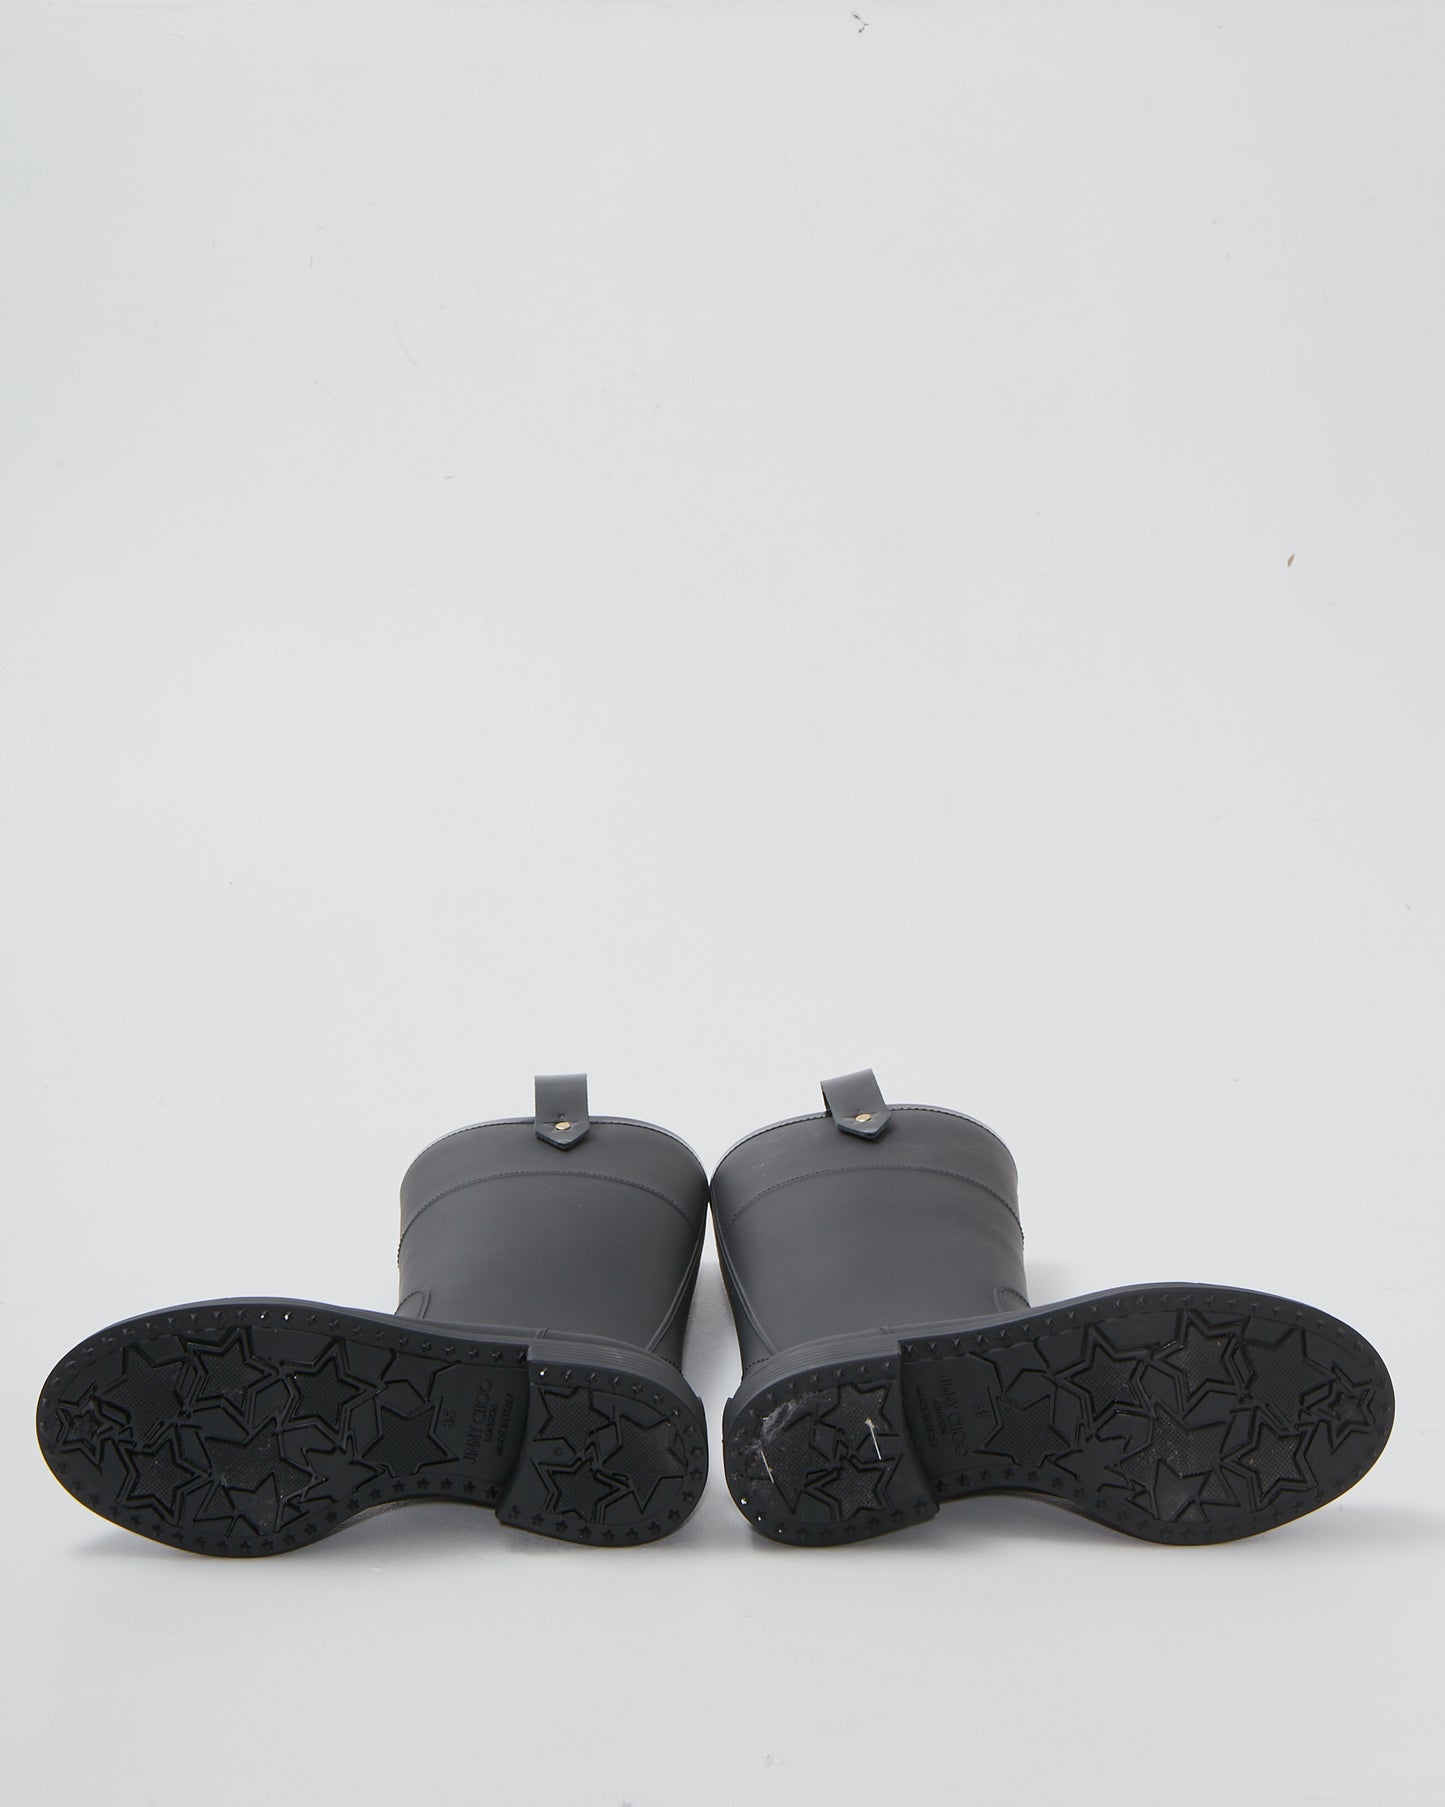 Jimmy Choo Black Rubber Cap Toe Rain Boots - 35